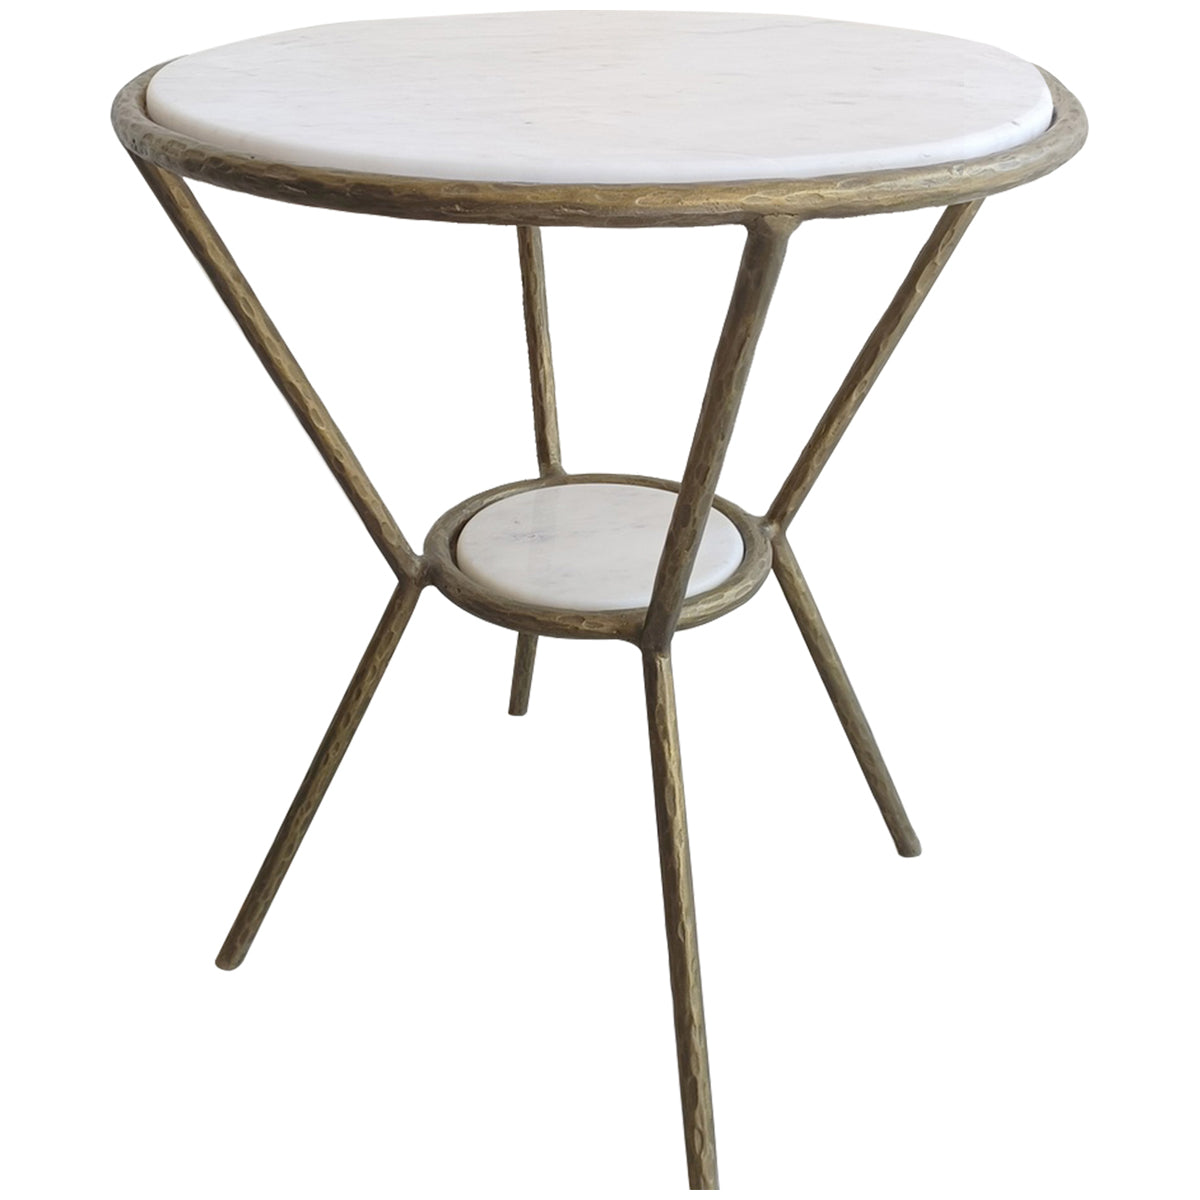 Uttermost Refuge Round White Side Table